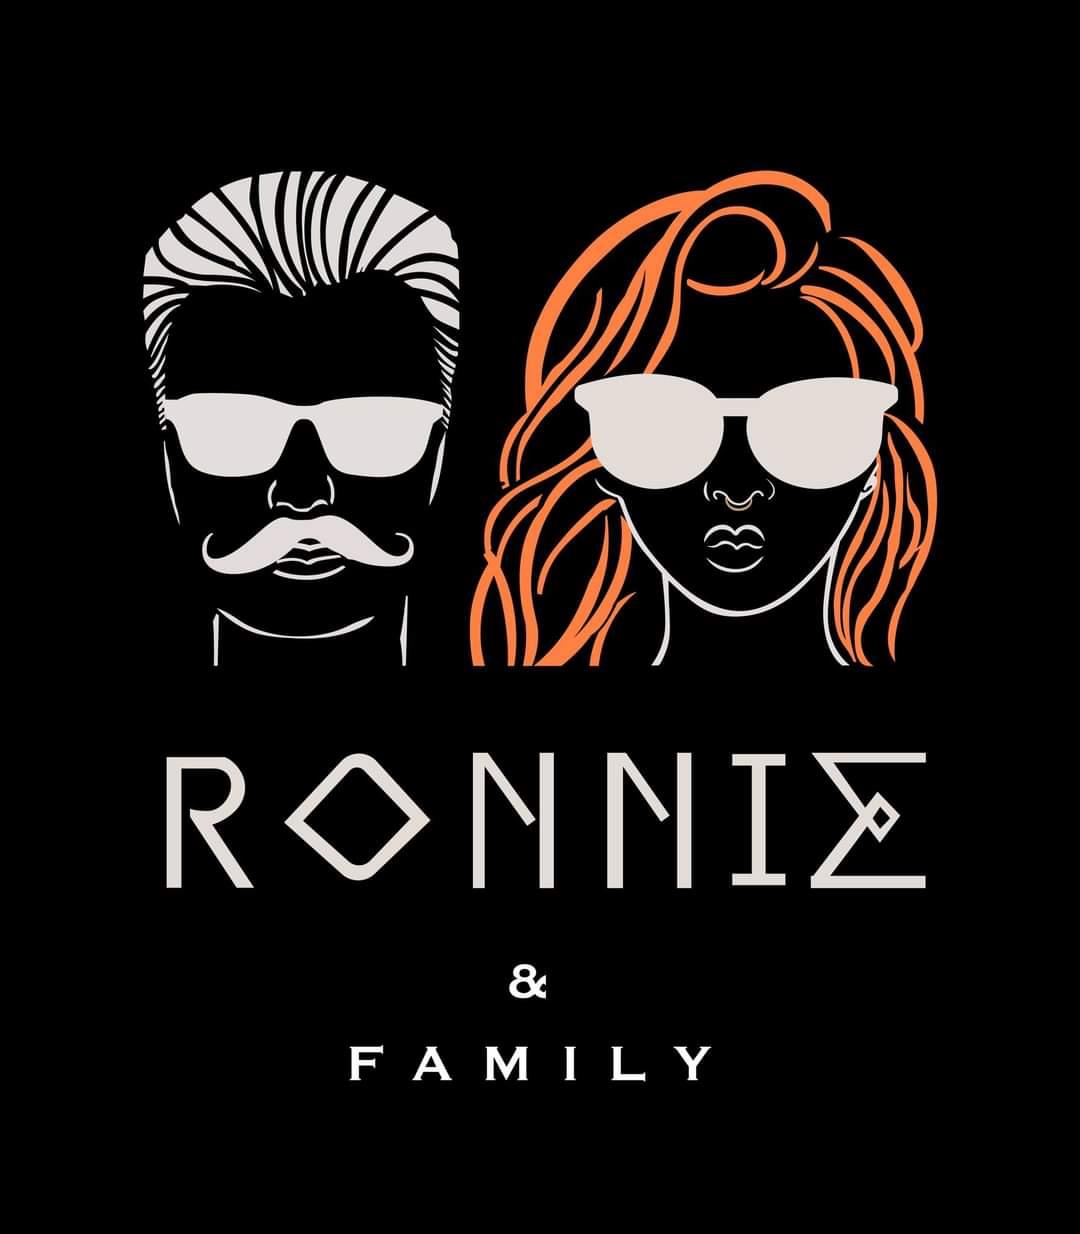 Ronnie & Family Barbershop/Salon